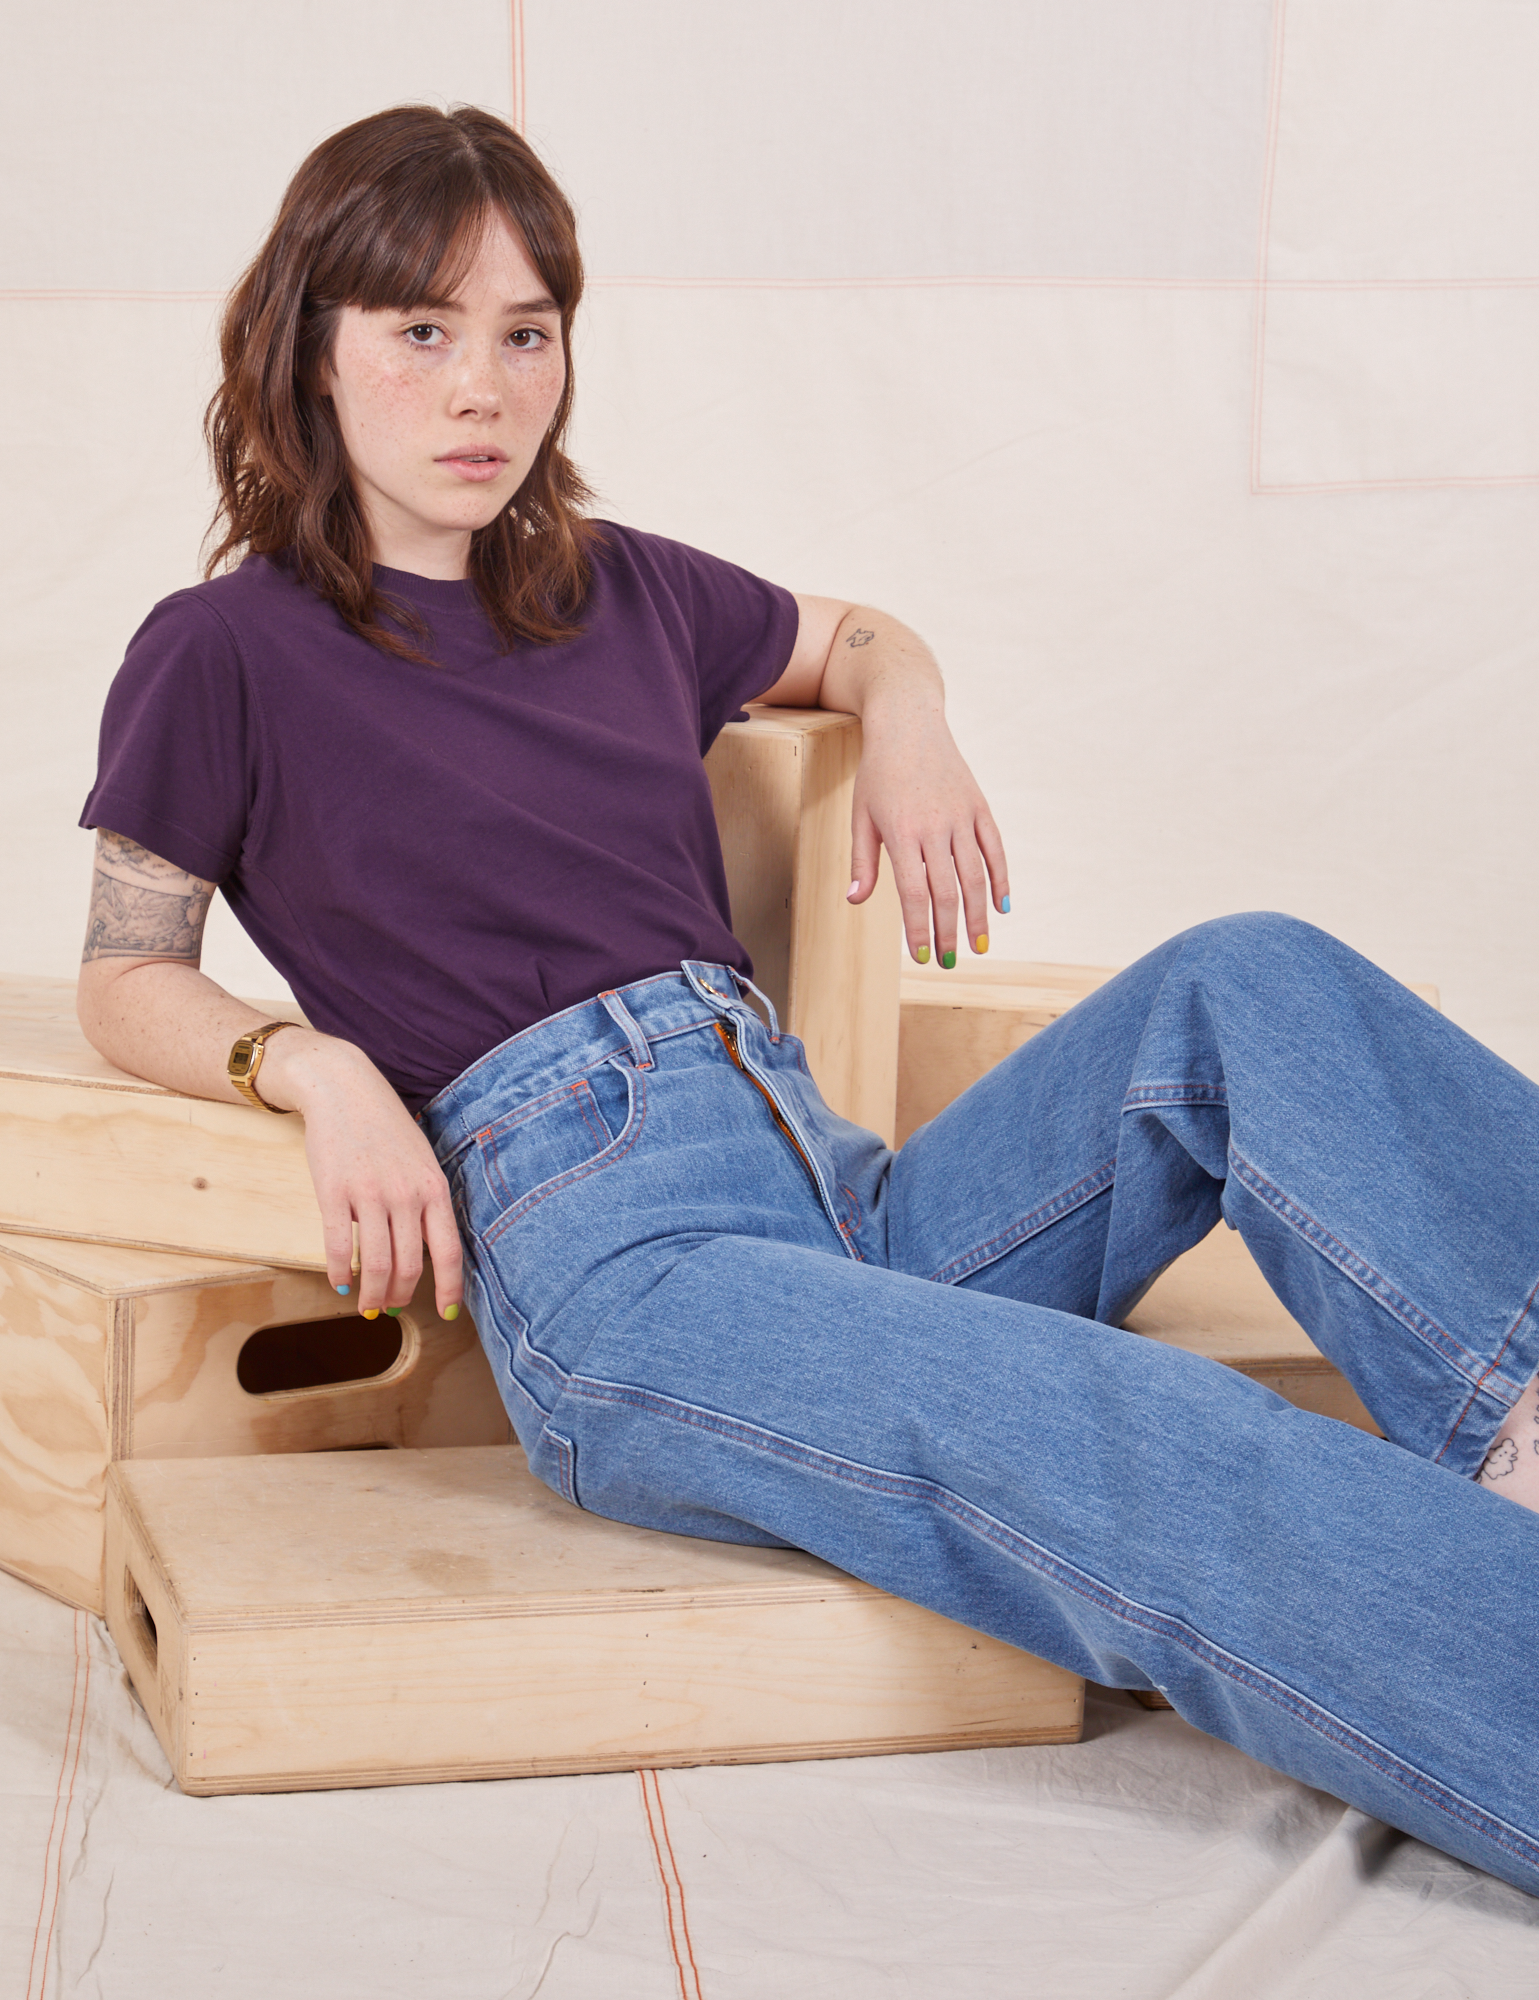 Hana is wearing The Organic Vintage Tee in Nebula Purple and Sailor Jeans